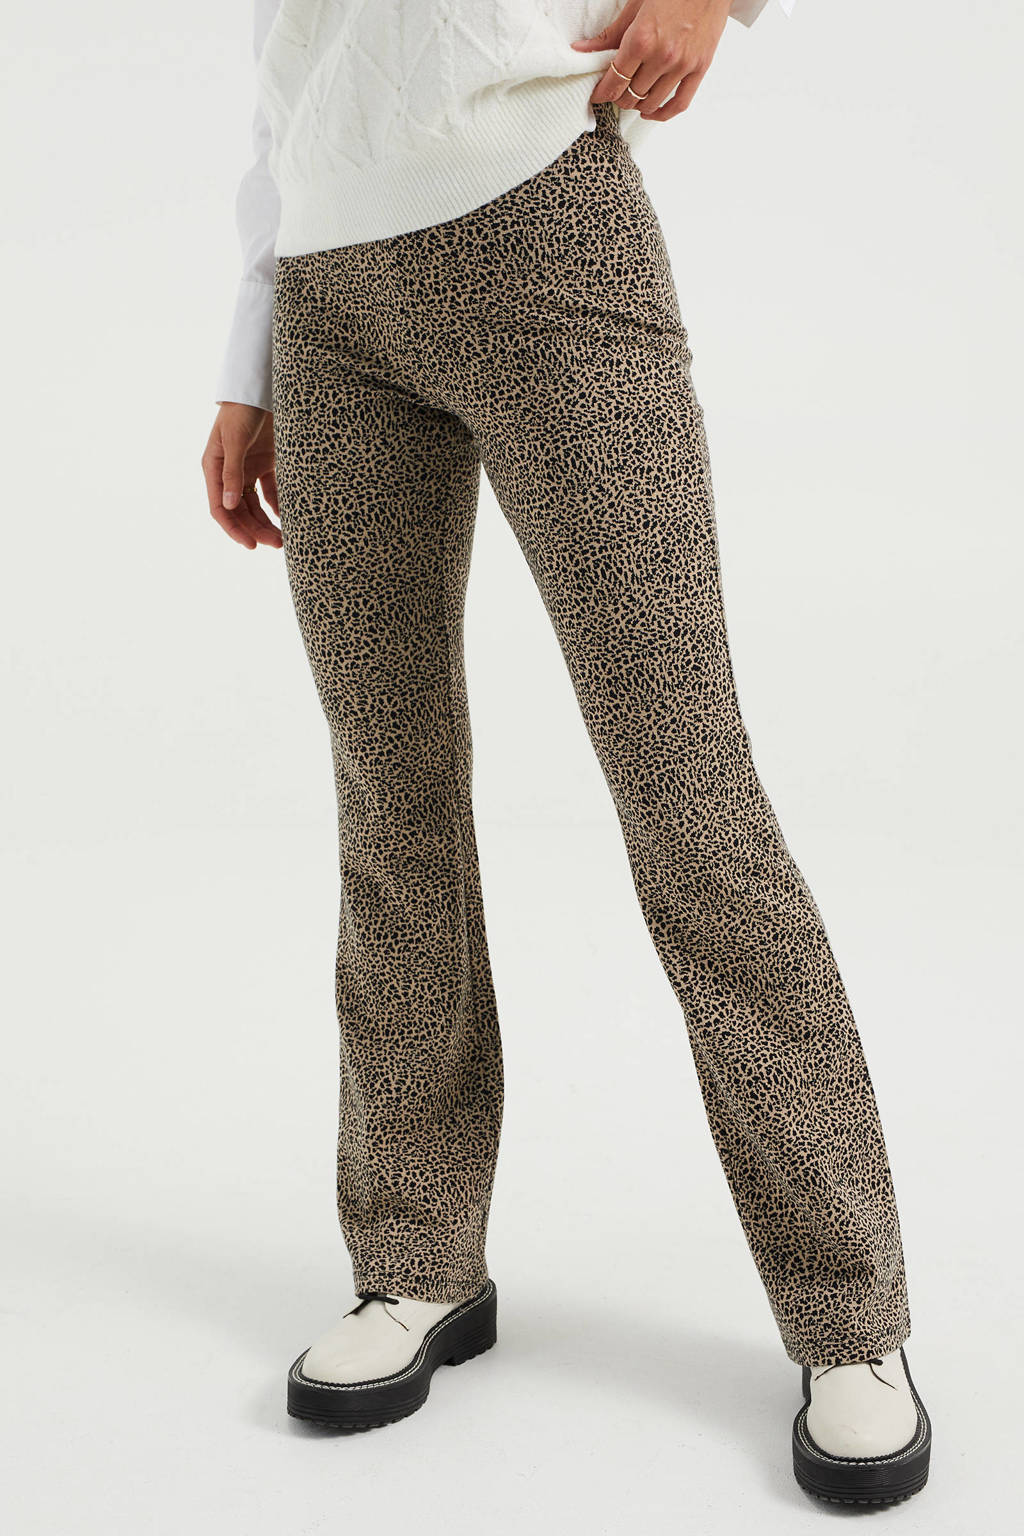 Beige en zwarte dames WE Fashion flared broek van stretchkatoen met regular waist, elastische tailleband en dierenprint